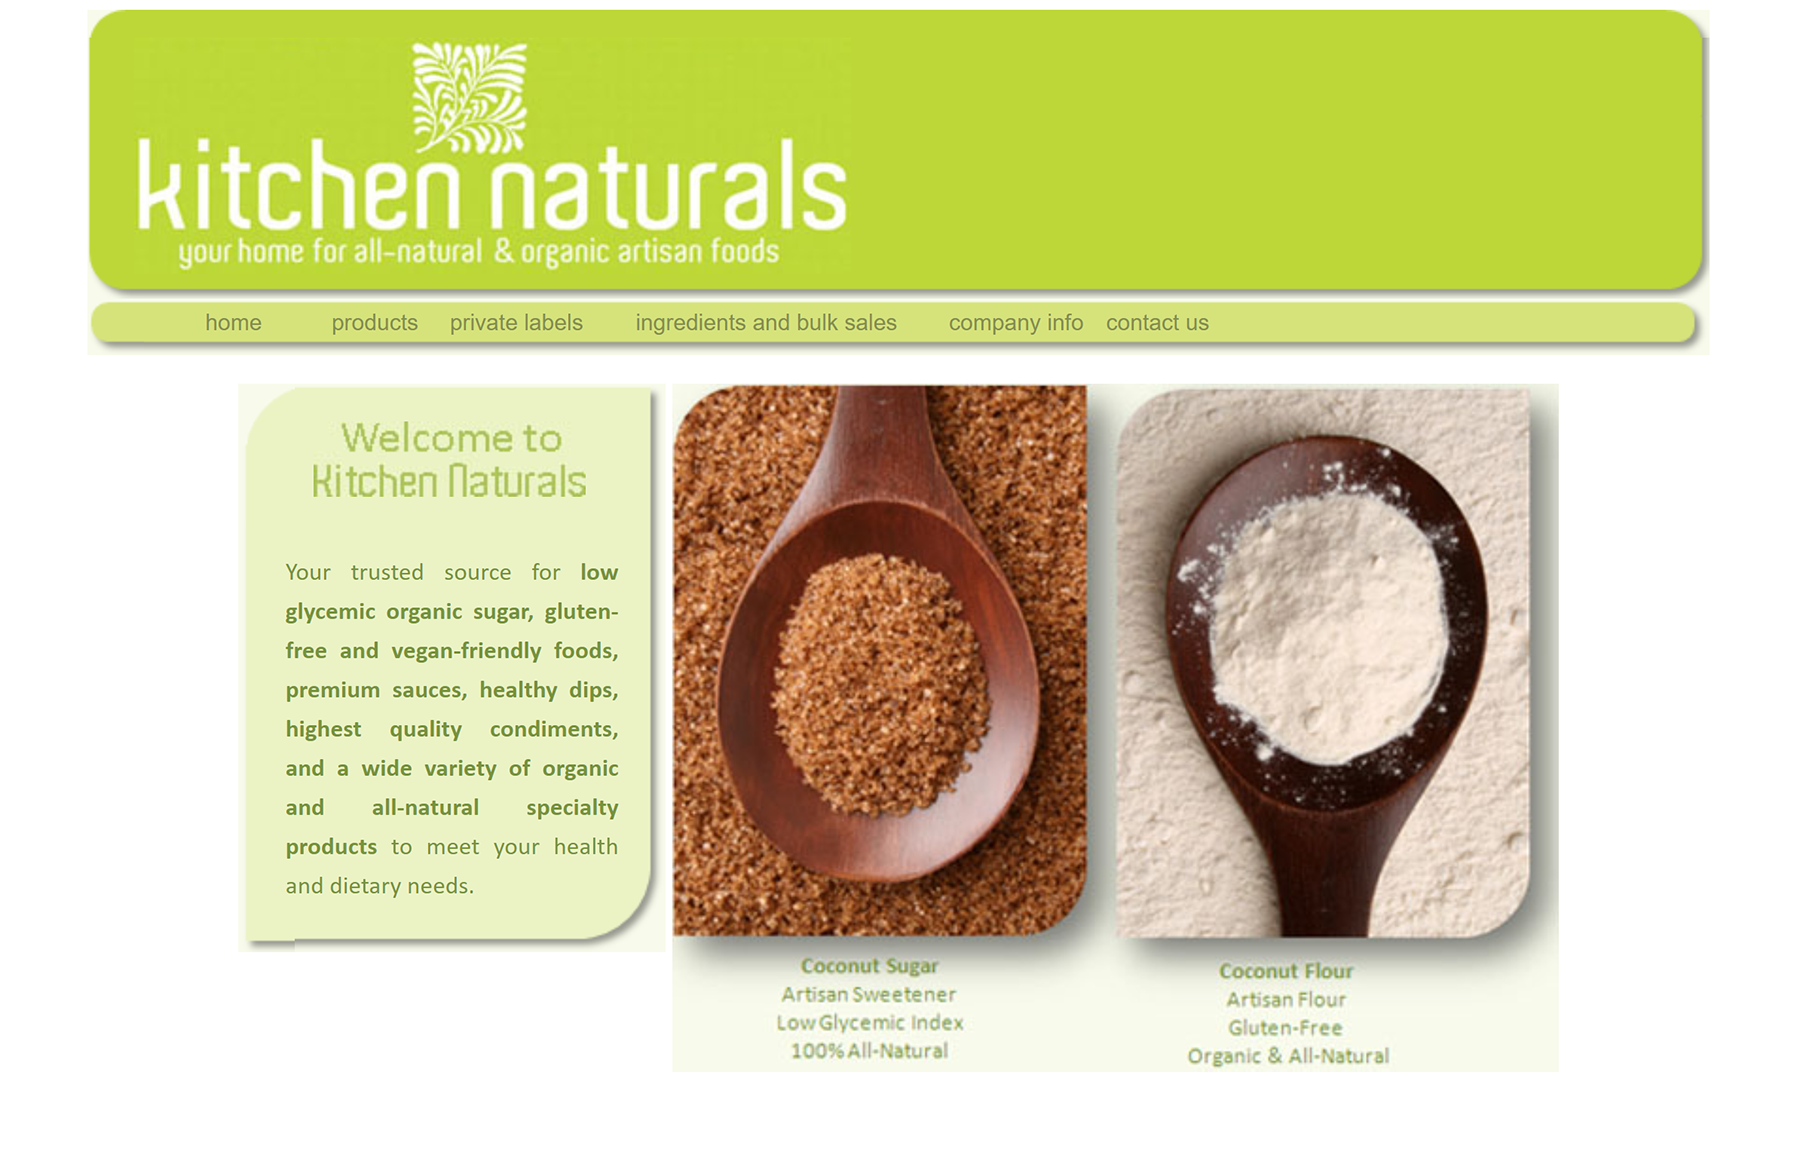 Kitchennaturals - All natural and organic artisan foods